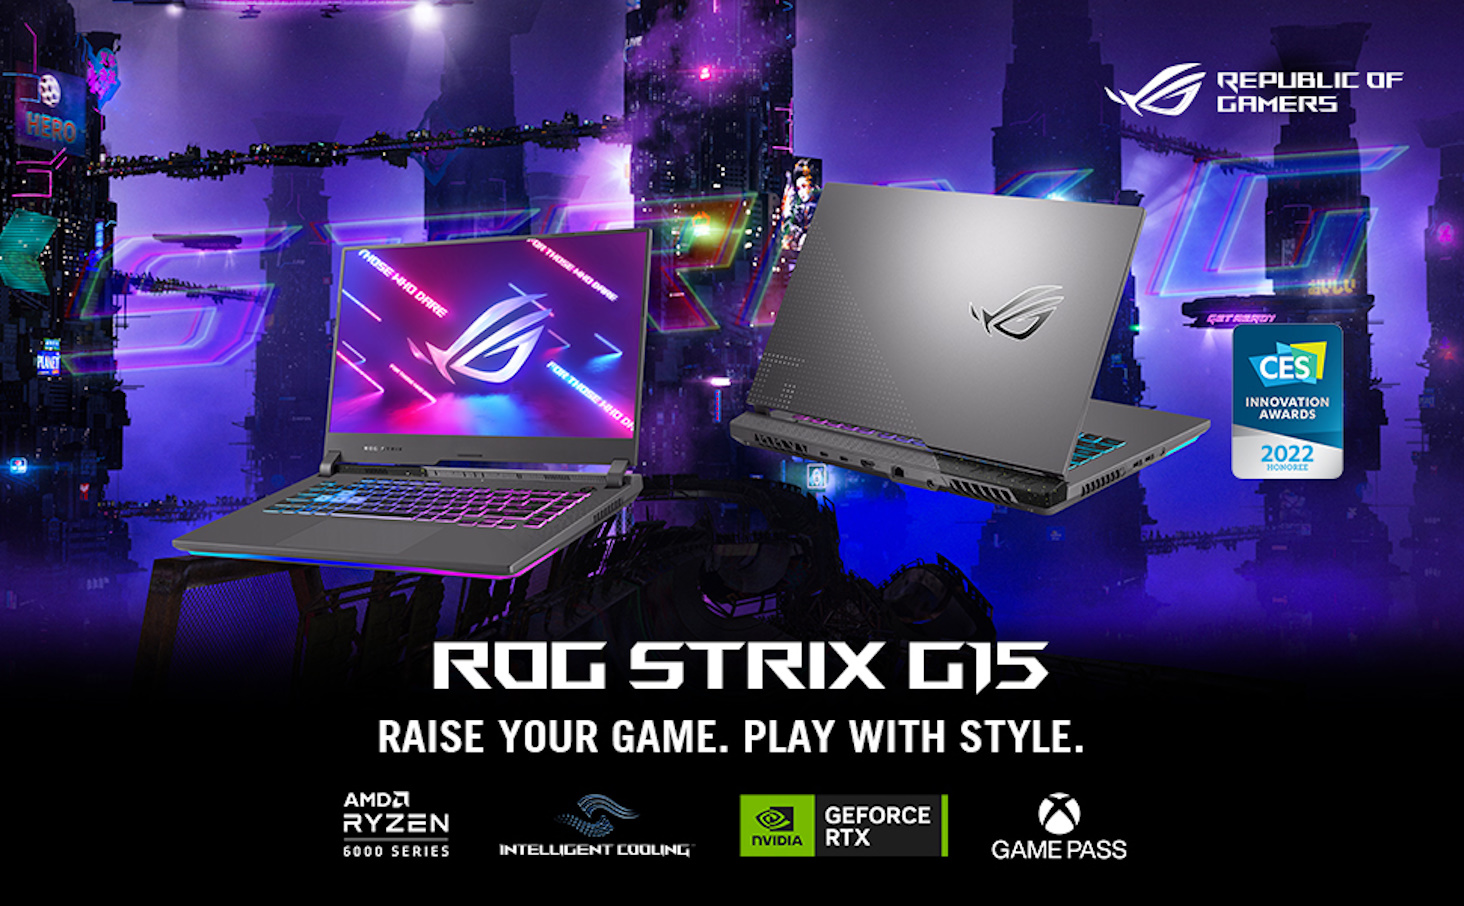 The ULTIMATE Esports Gaming Laptop! - ASUS ROG Strix G15 2022